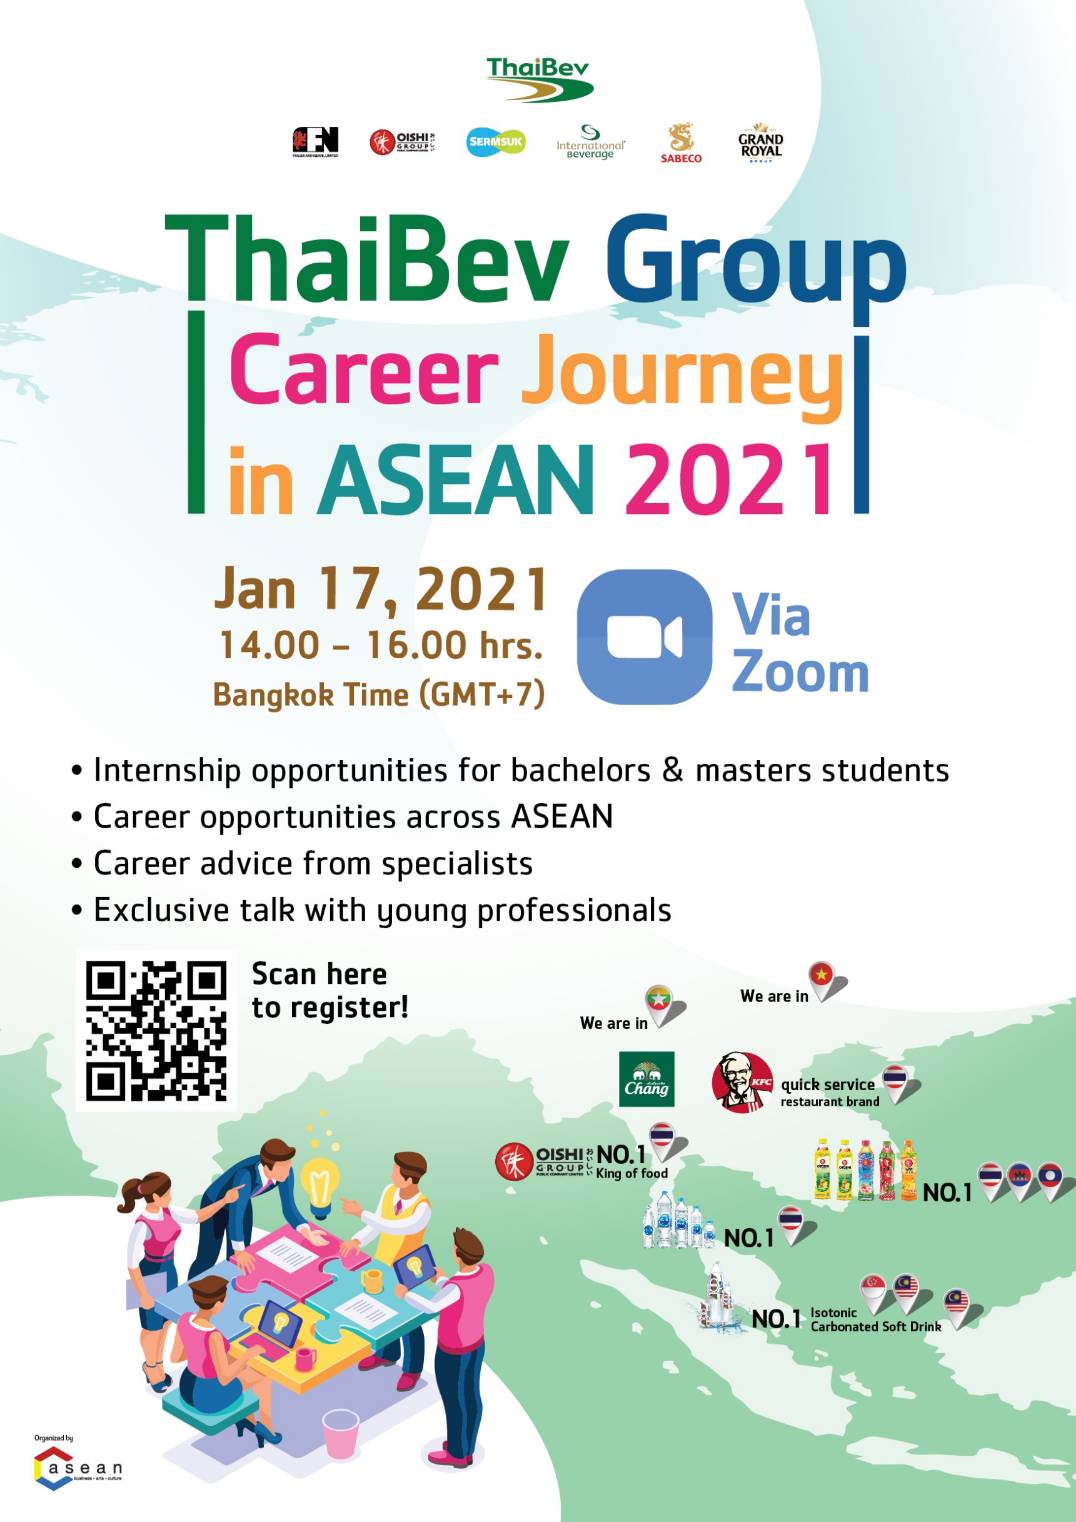 Career Journey in ASEAN 2021 by ThaiBev